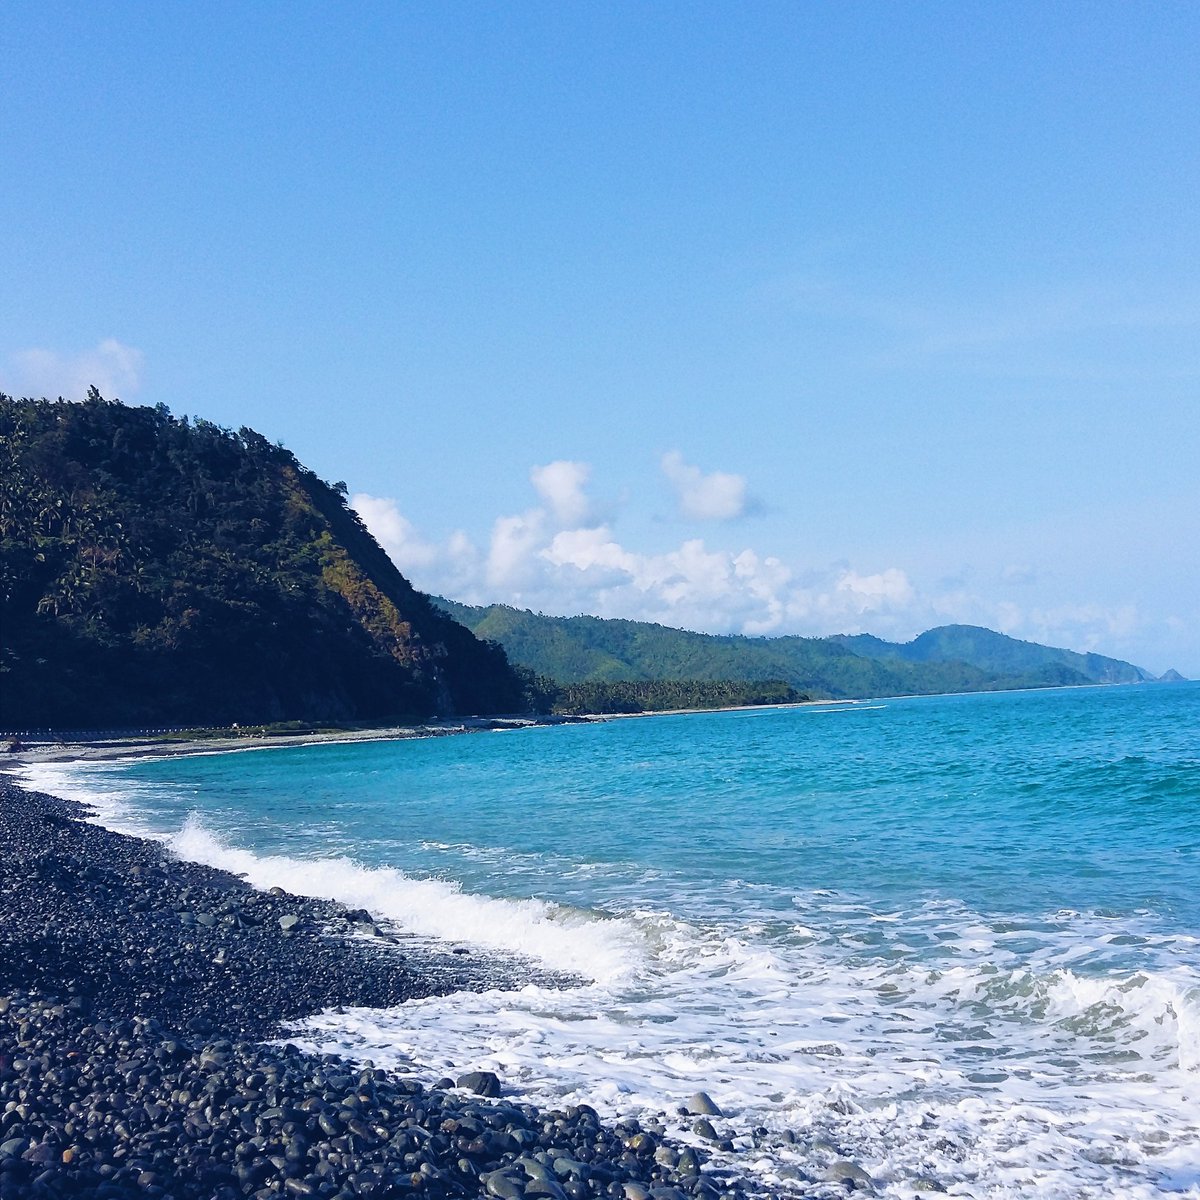 Take me here 💙🌊 #beachlife #oceanminded #travelblog #exploreasia #travelblogger #mytinyatlas #filipinablogger #blue